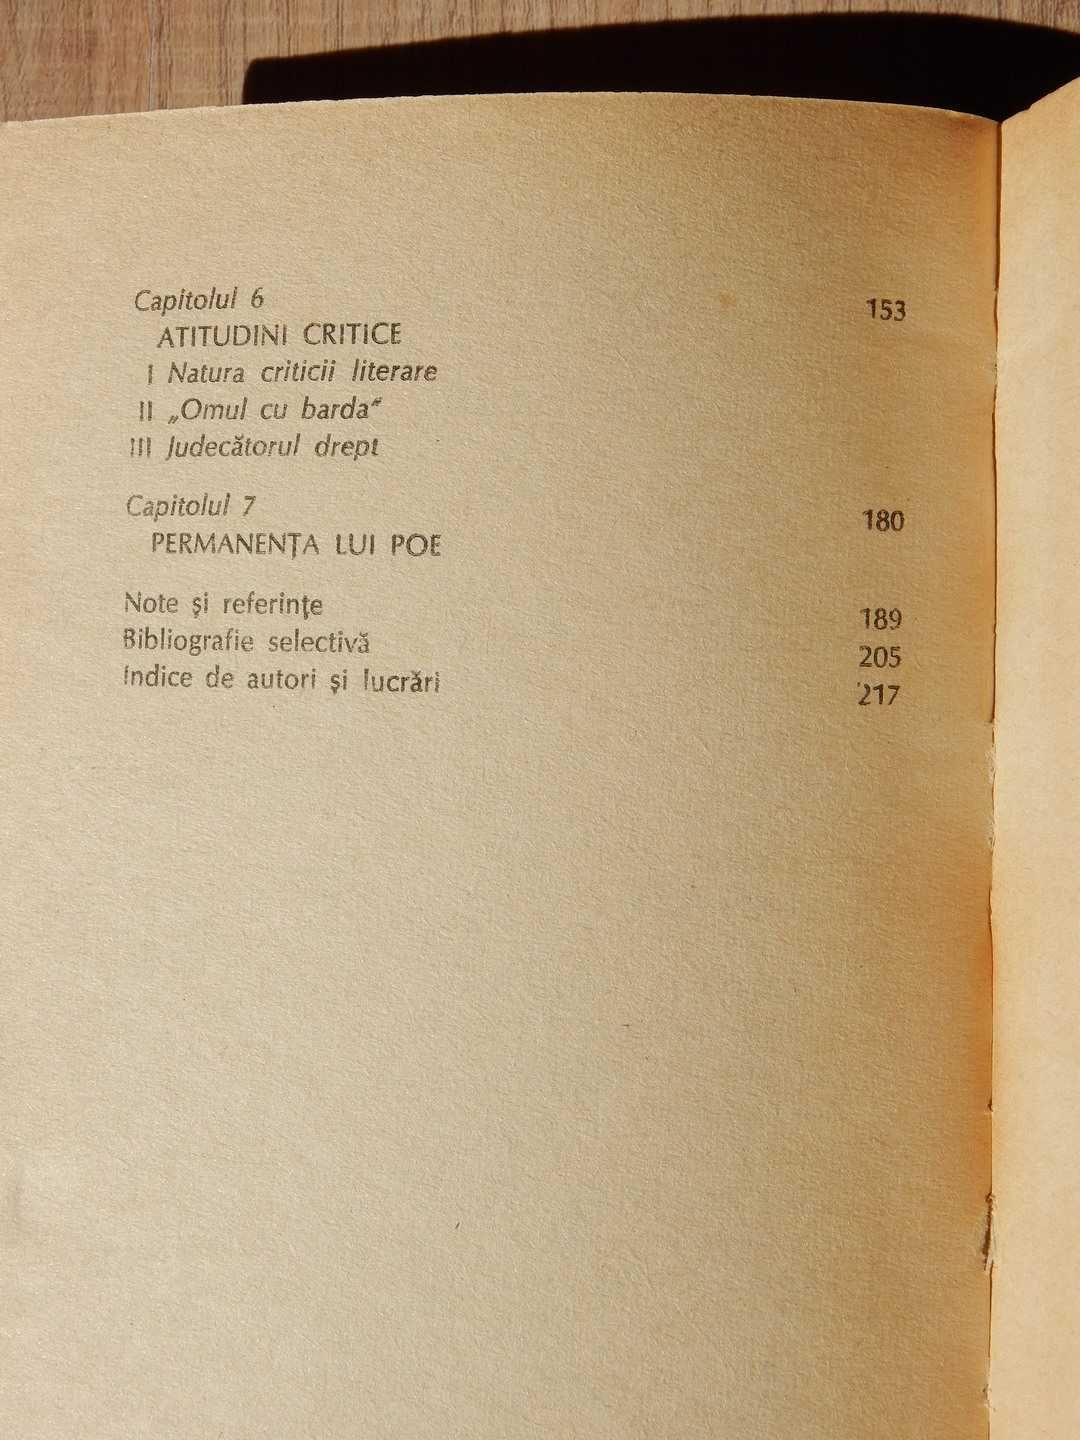 Edgar Allan Poe Vincent Buranelli Ed Literatura Universala 1966